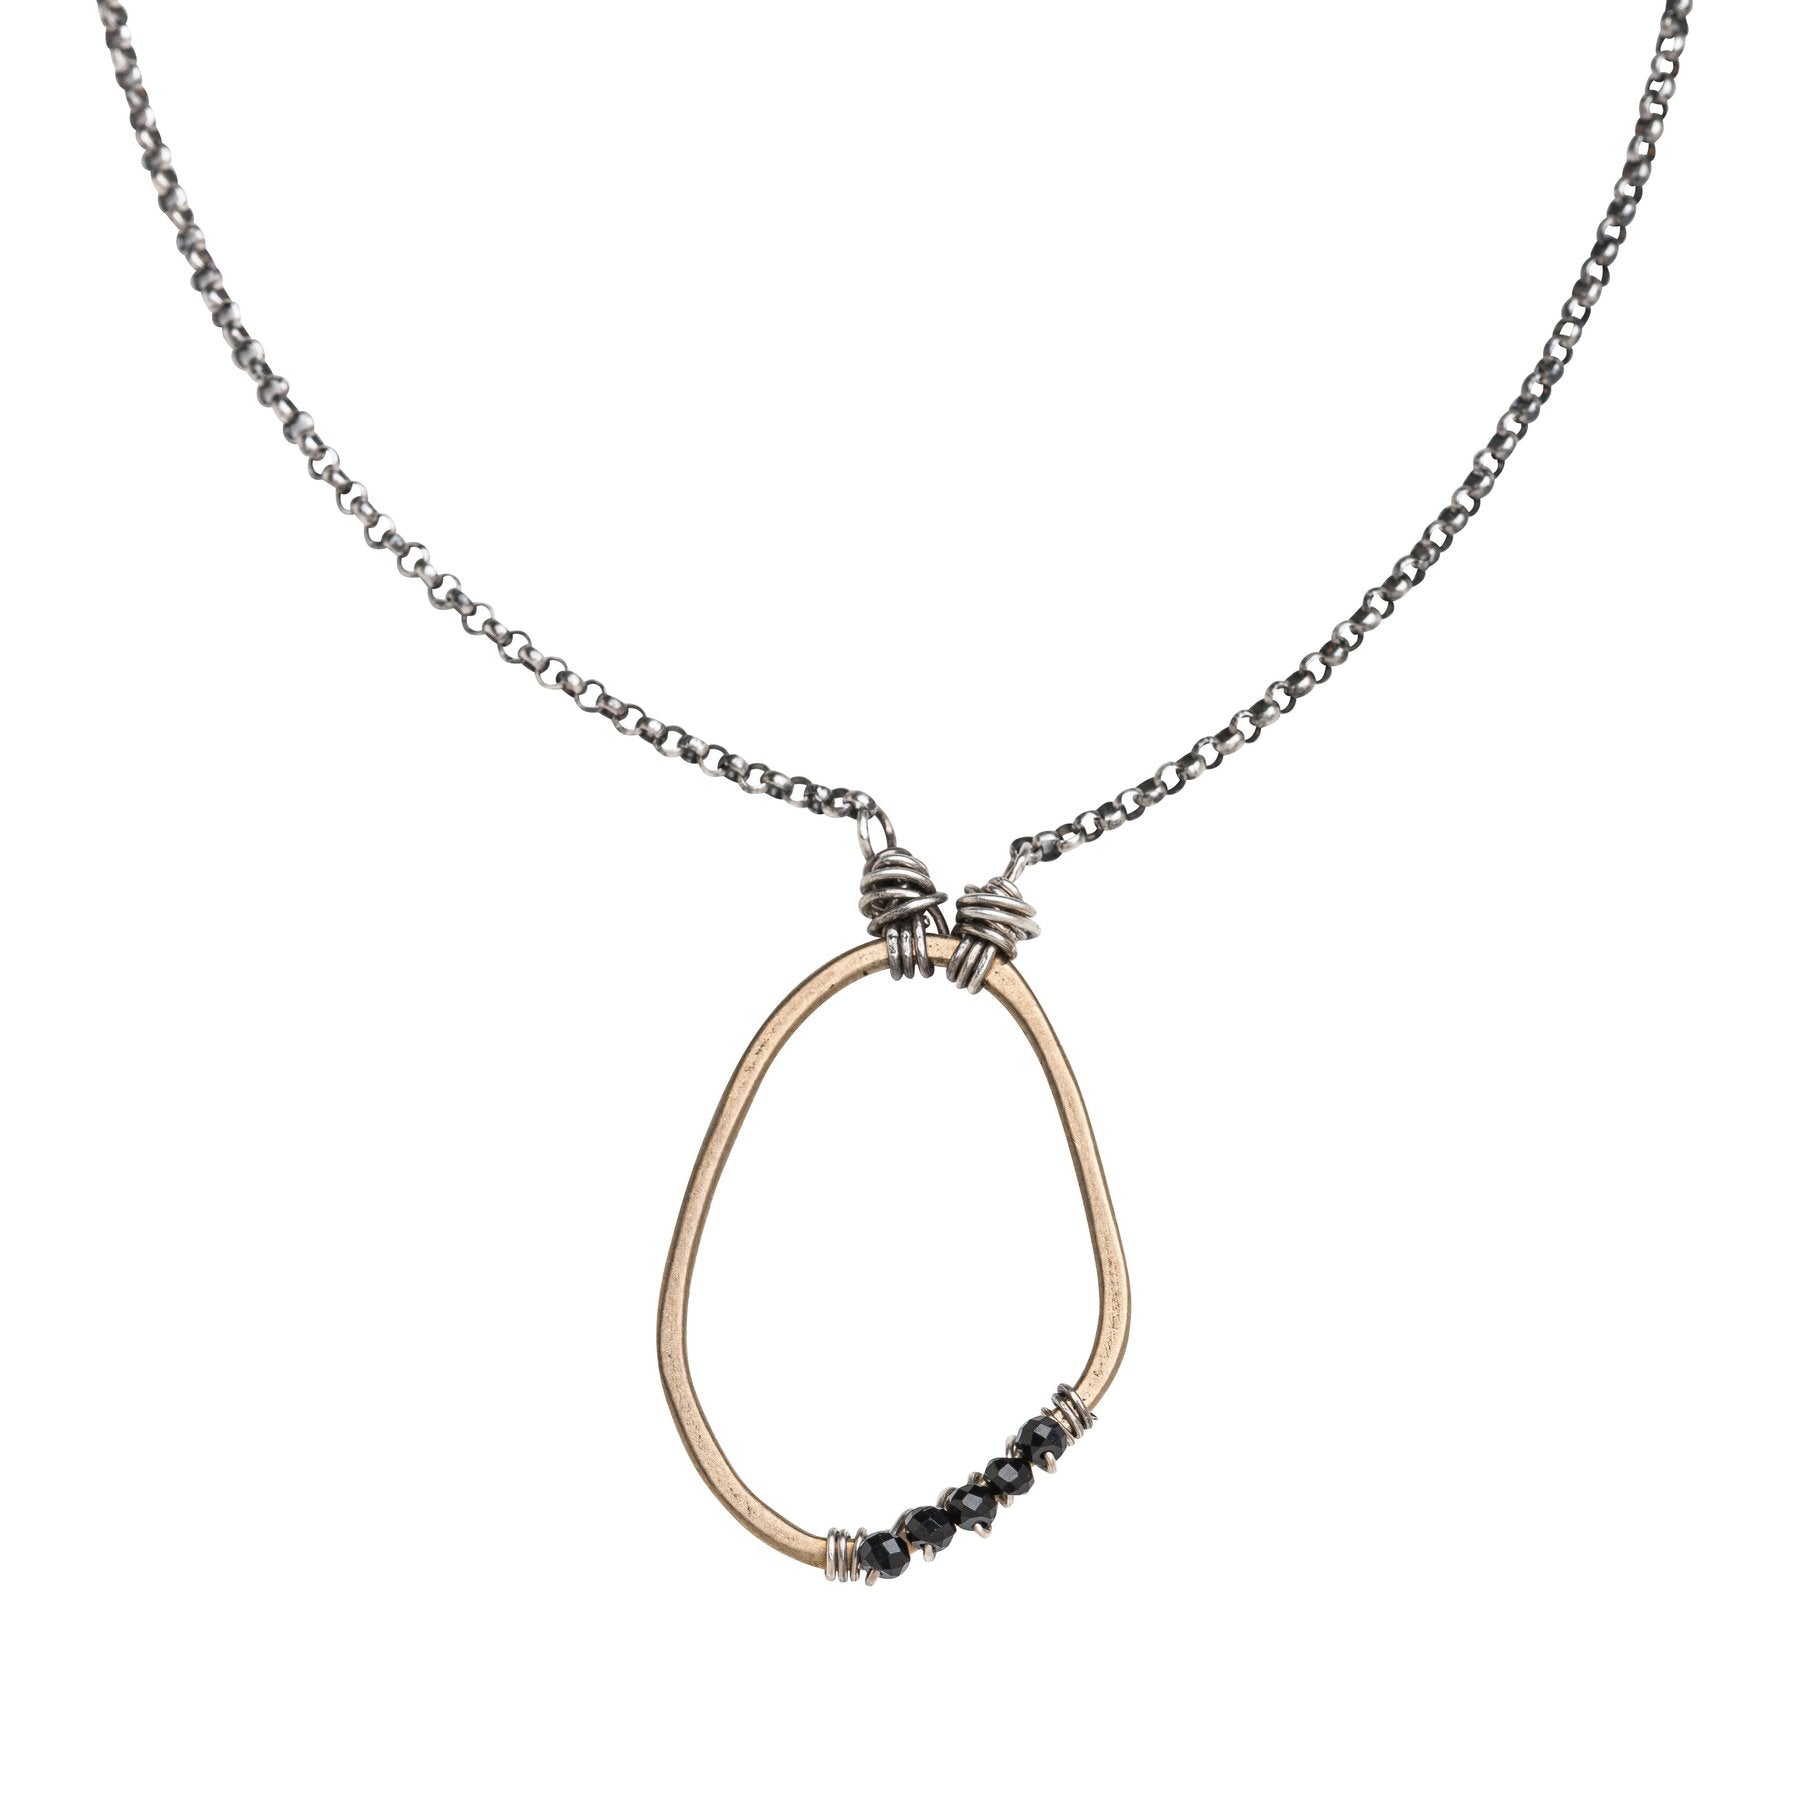 Freeform Wrap Necklace with Black Garnet by Original Hardware